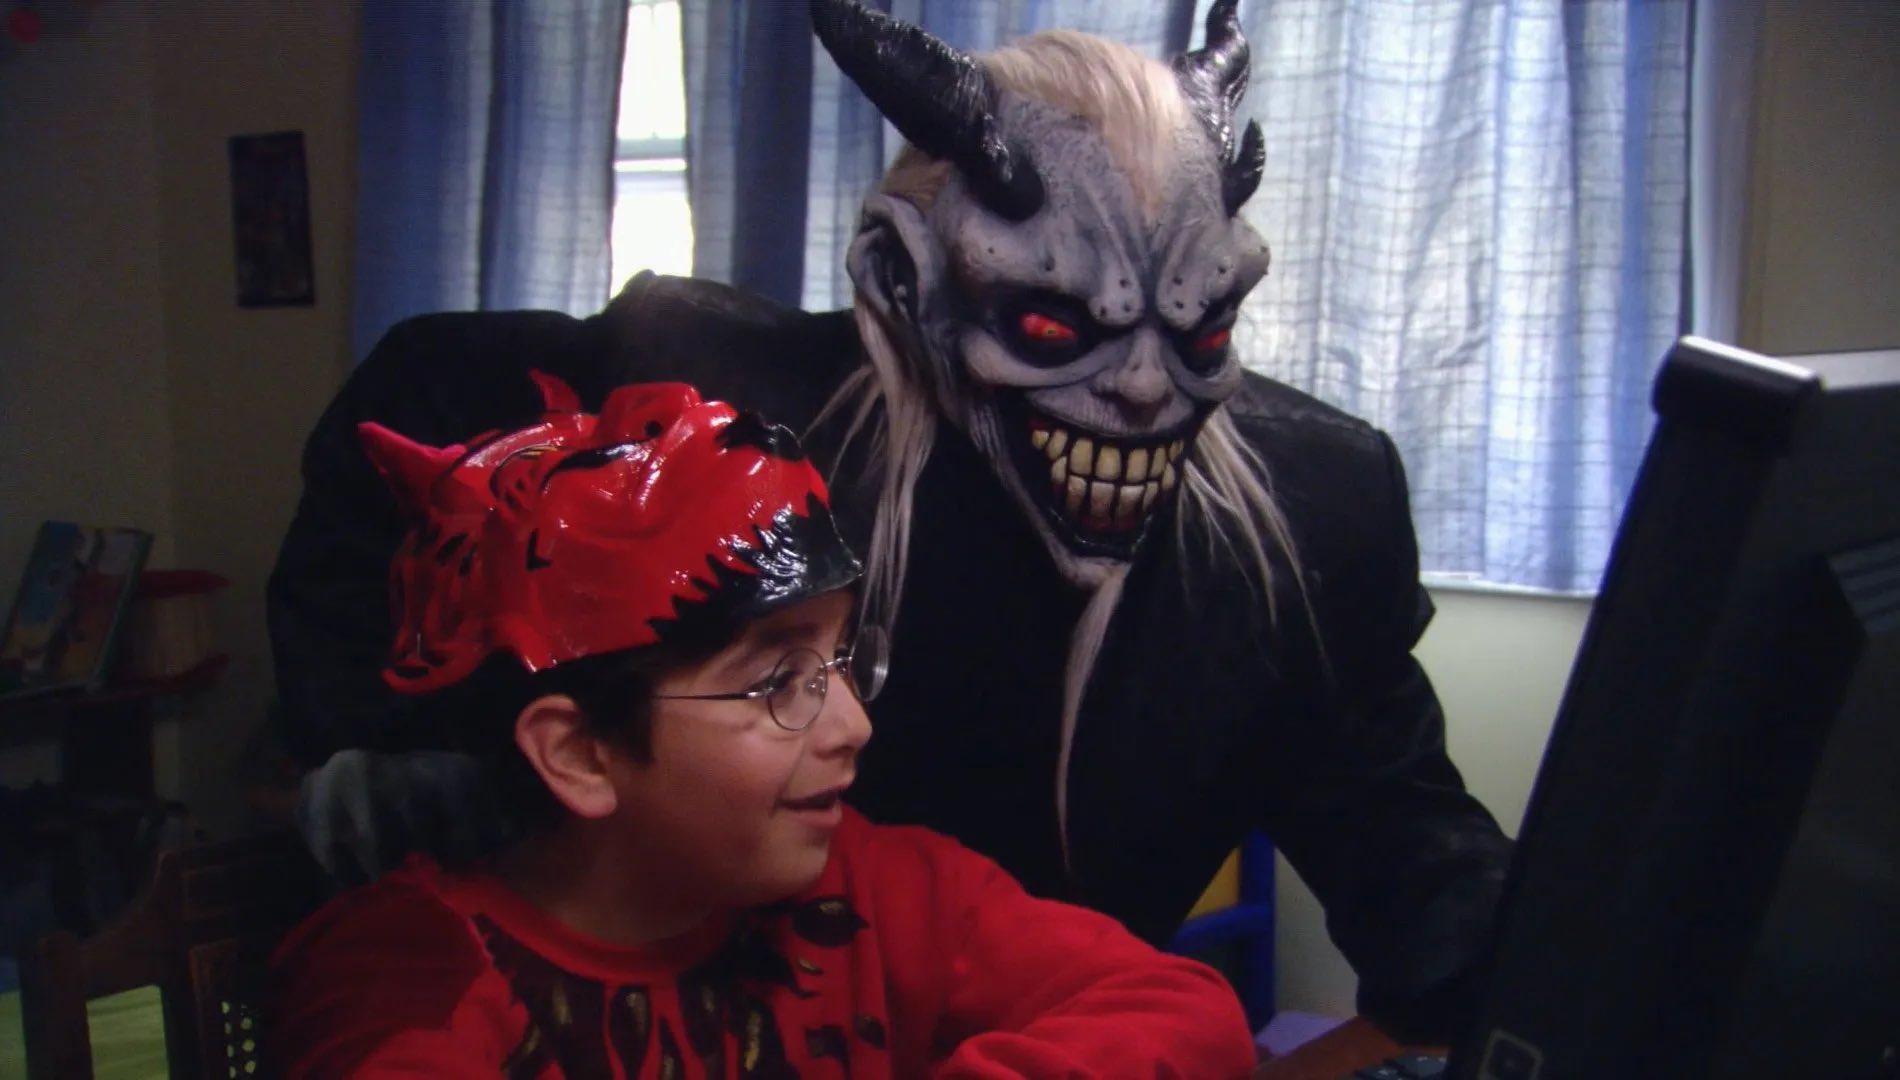 Satan's Little Helper (2004) image film